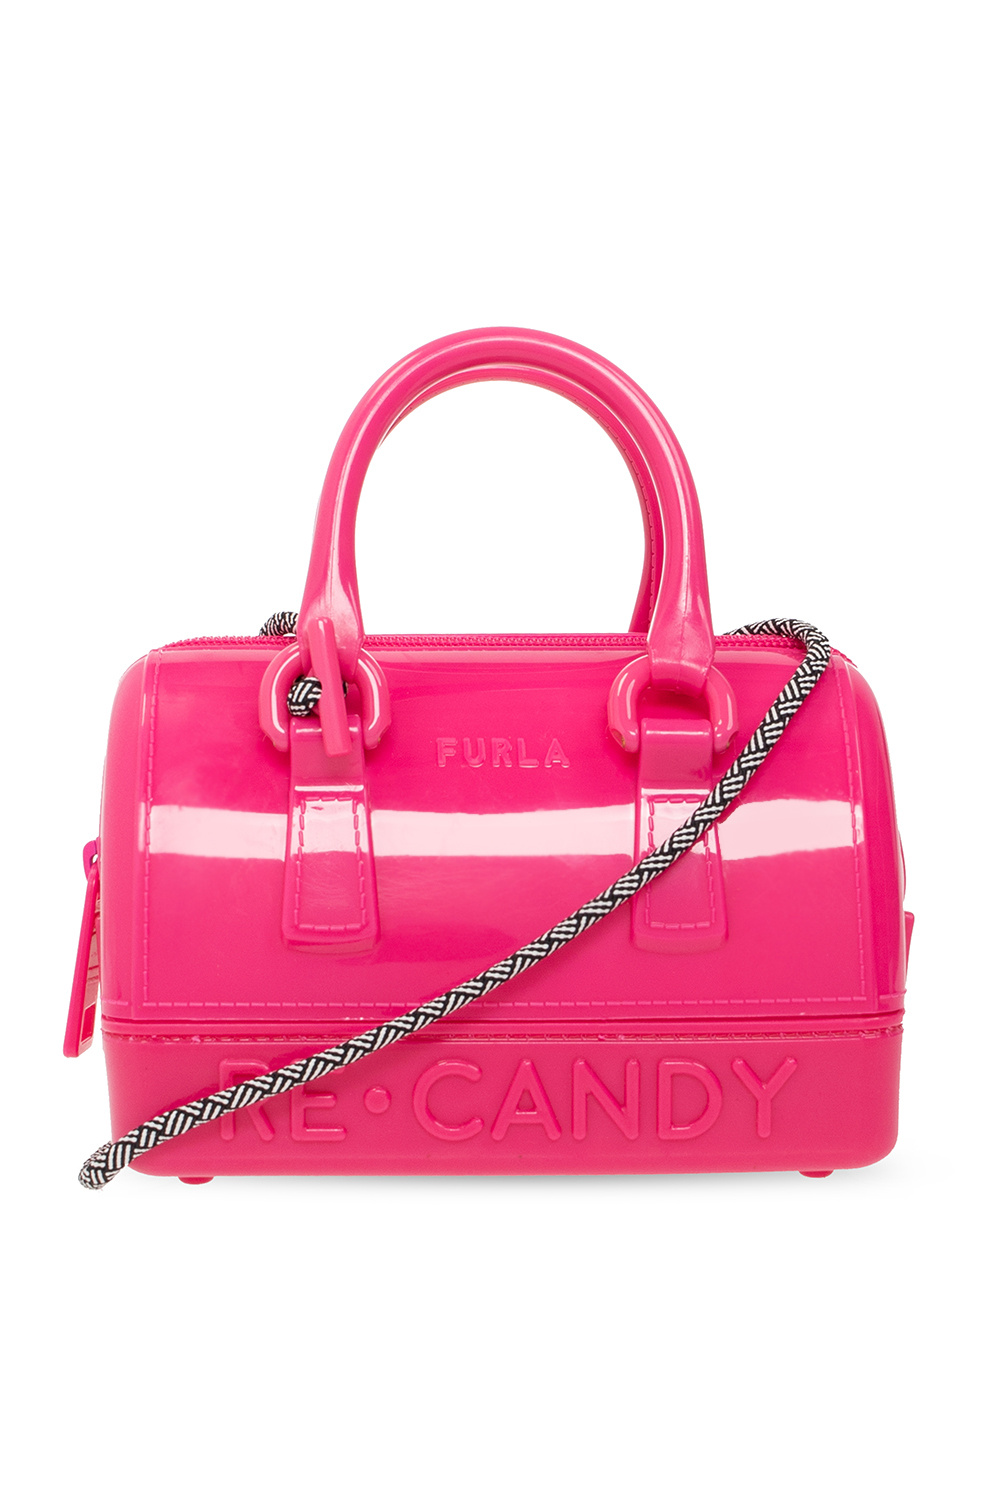 Furla Women's Mini Bag - Pink - Shoulder Bags